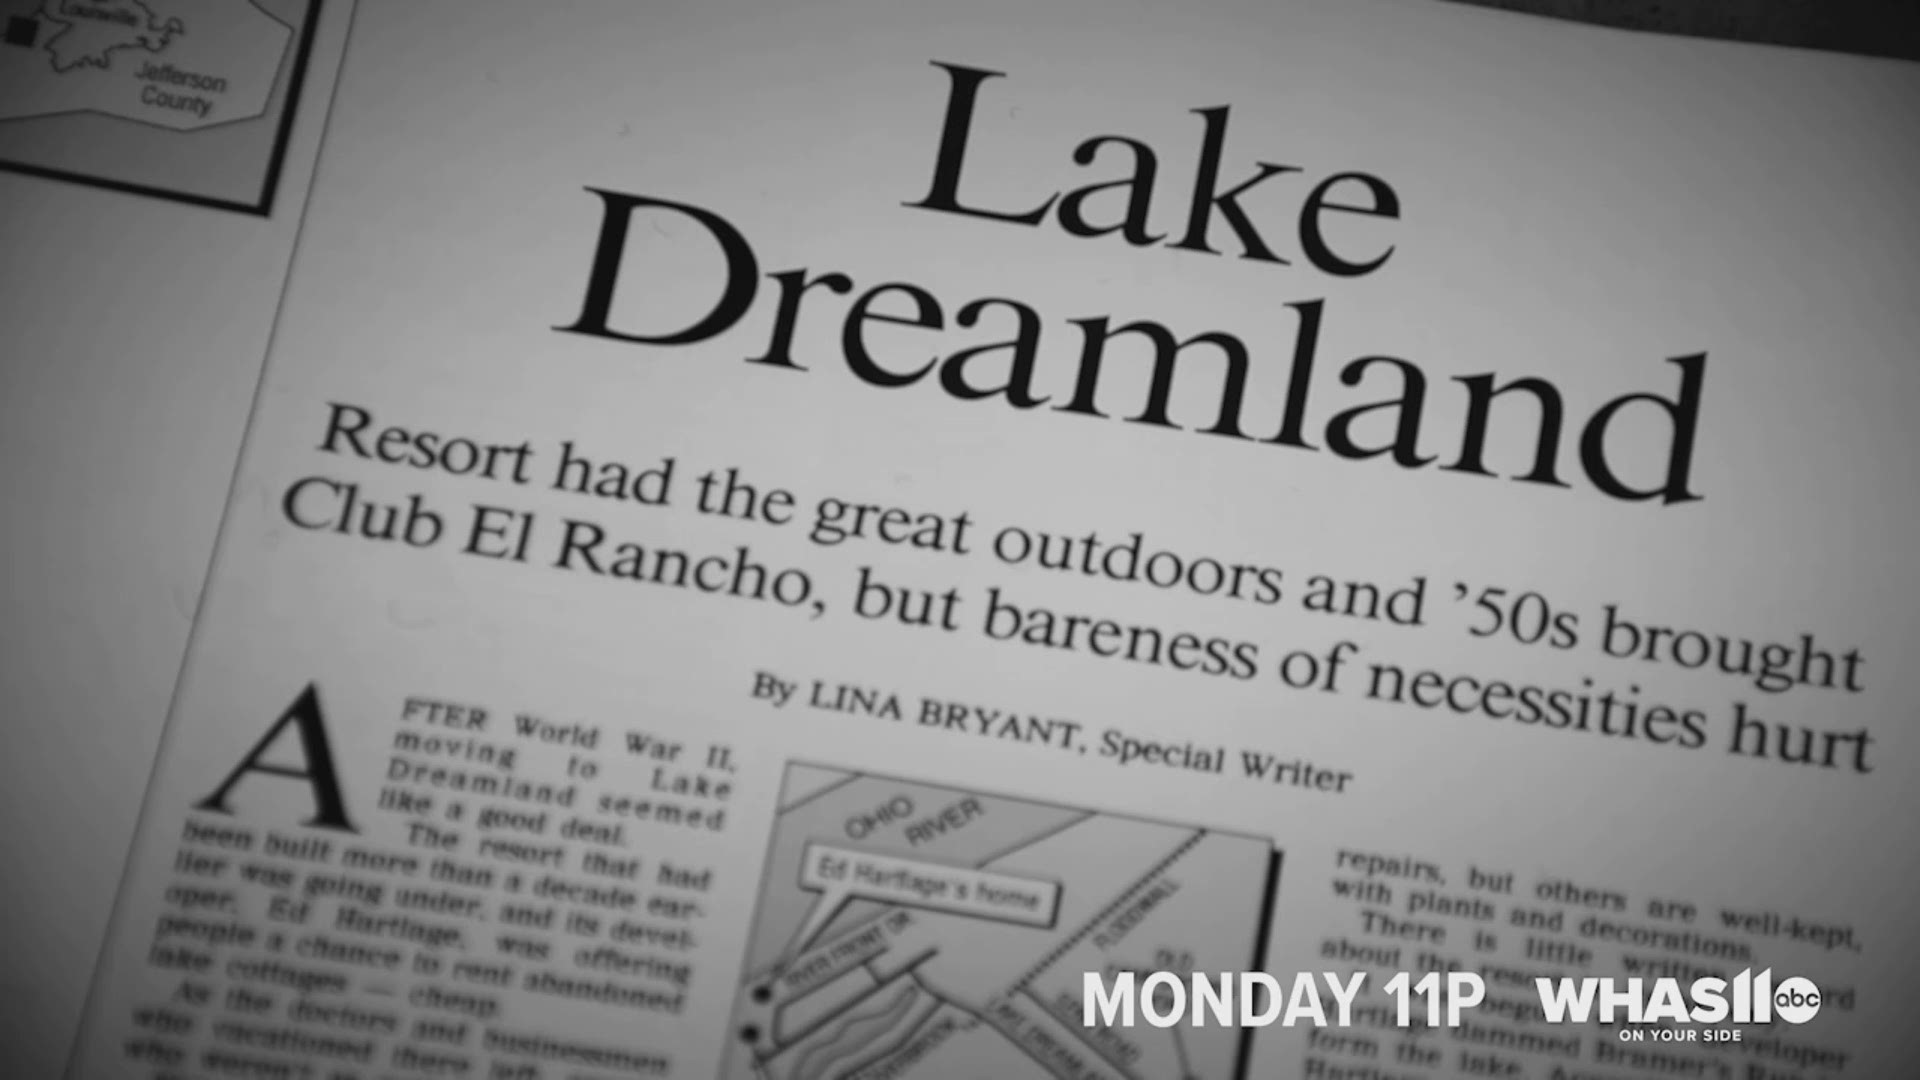 Lake Dreamland: Saving the Dream